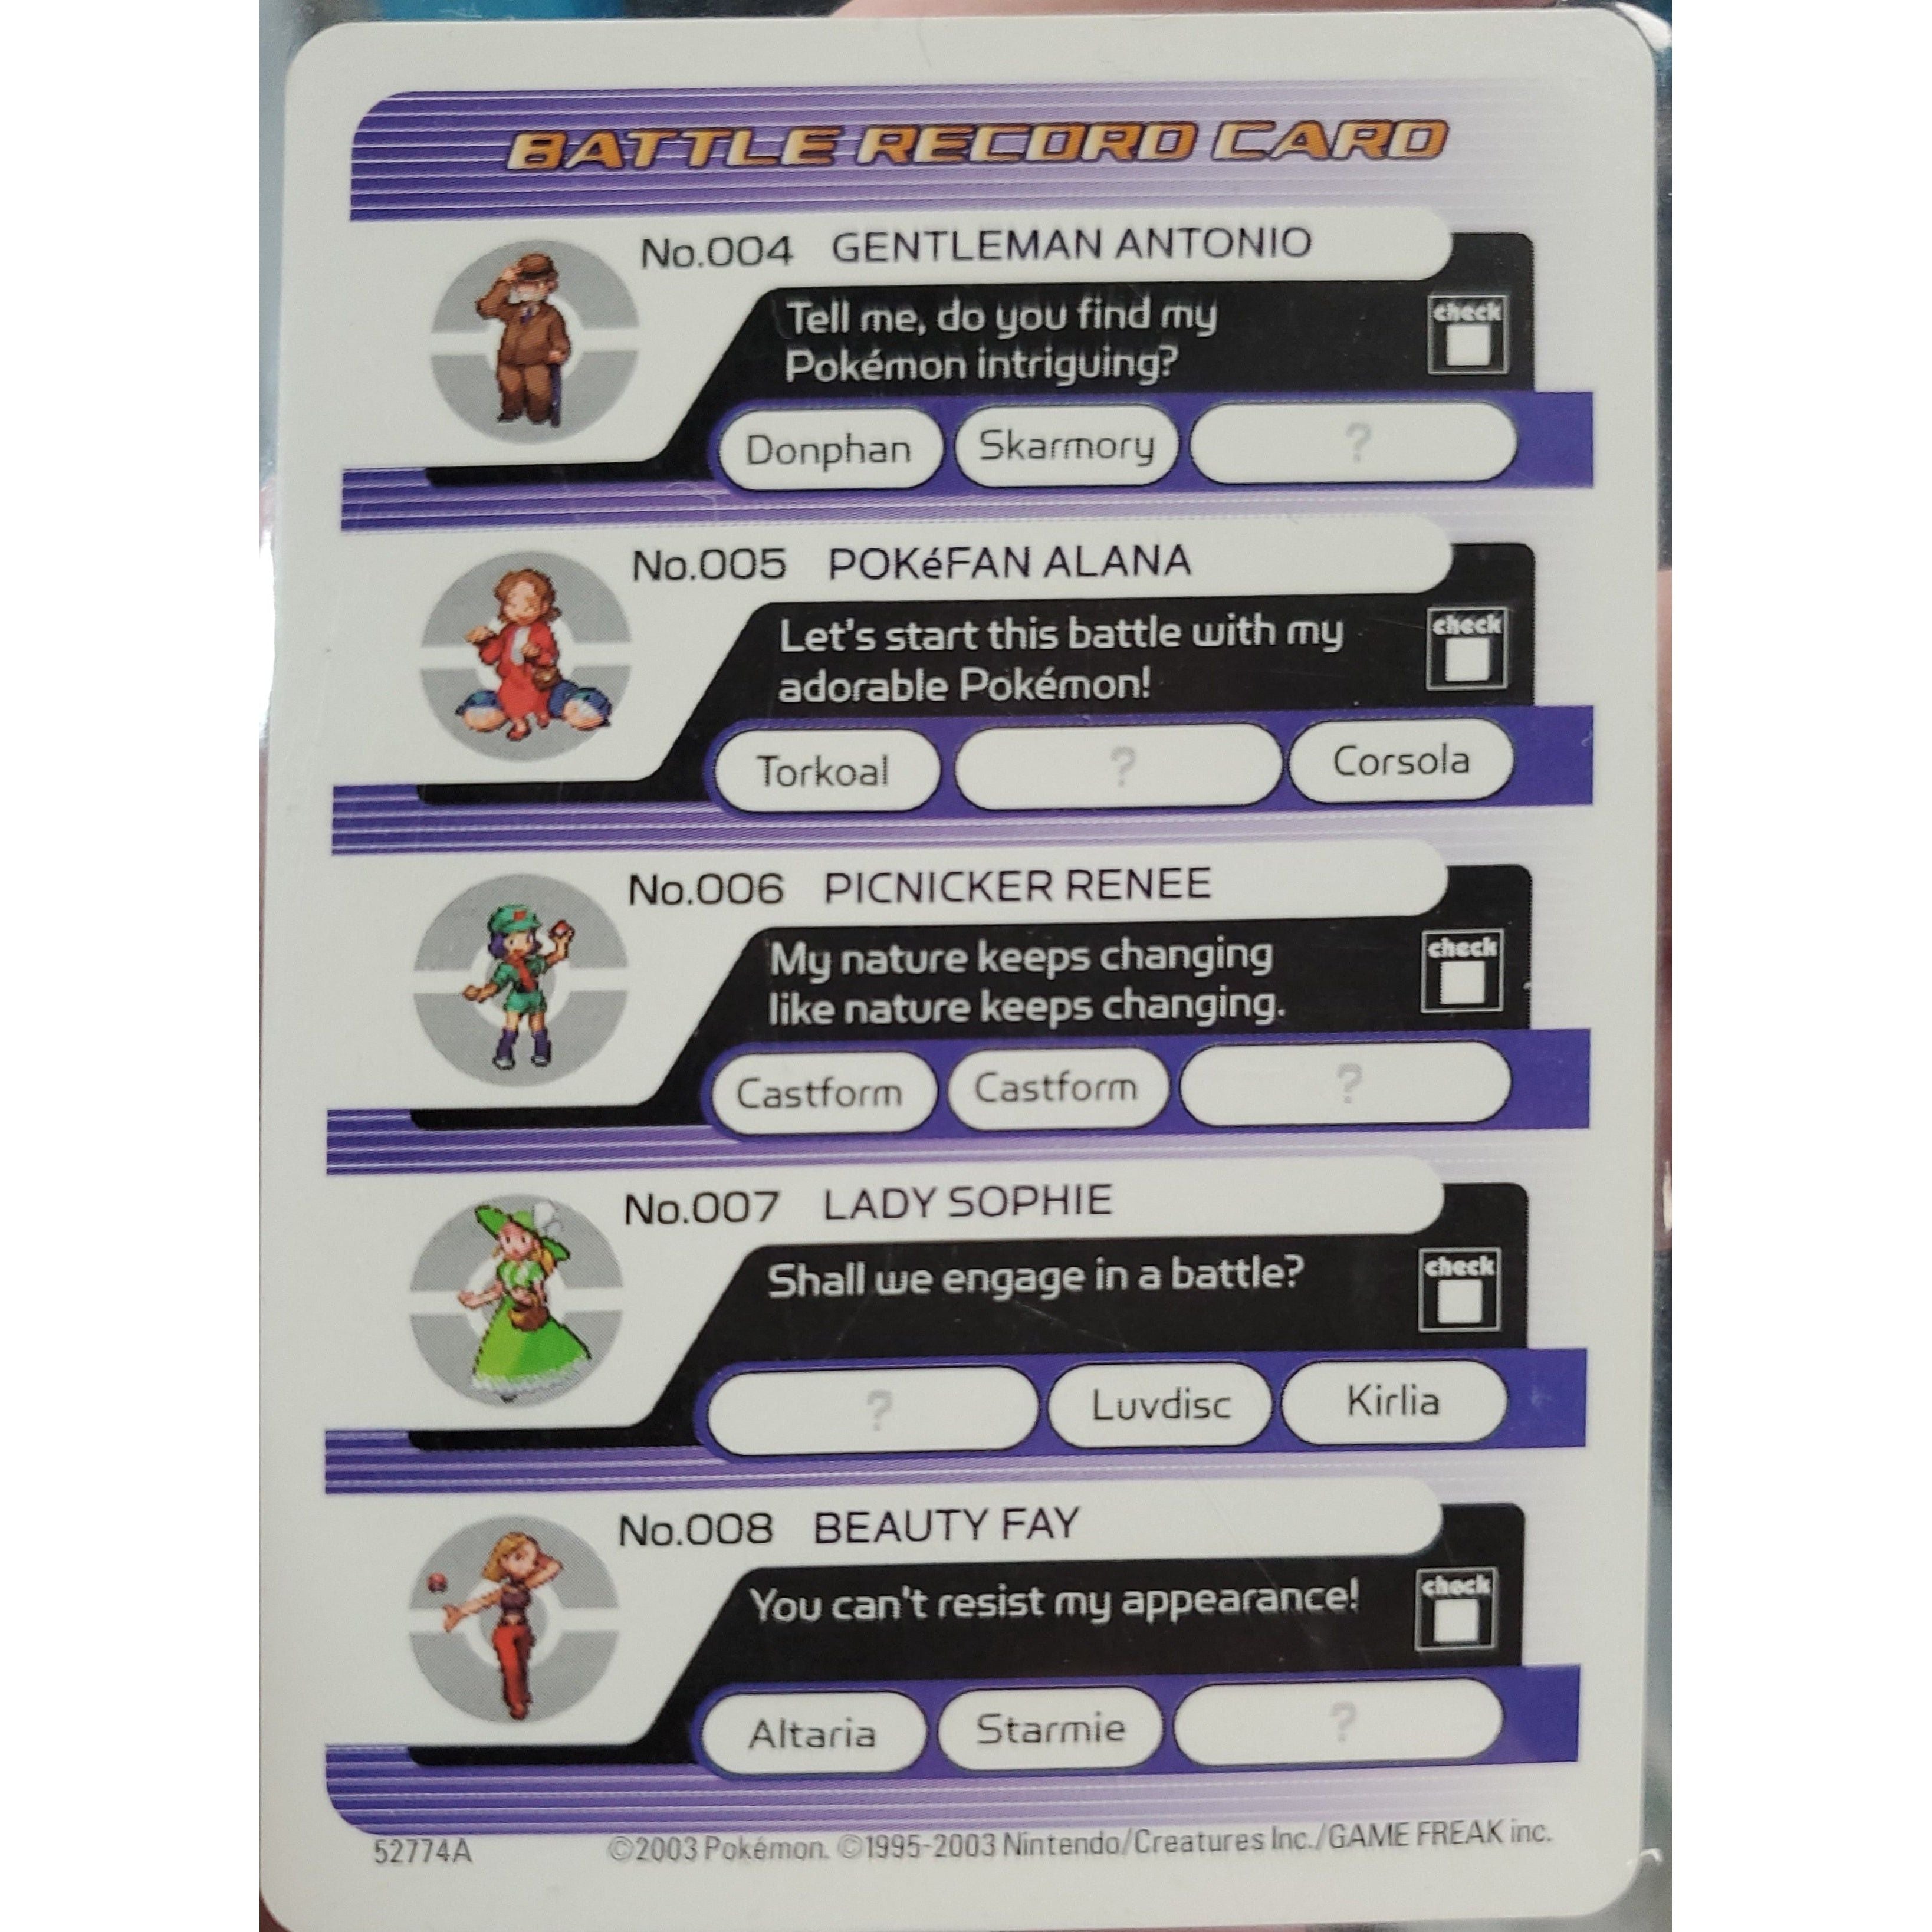 GBA - Pokemon Battle Card - Freezing Ray Battle Record Cart